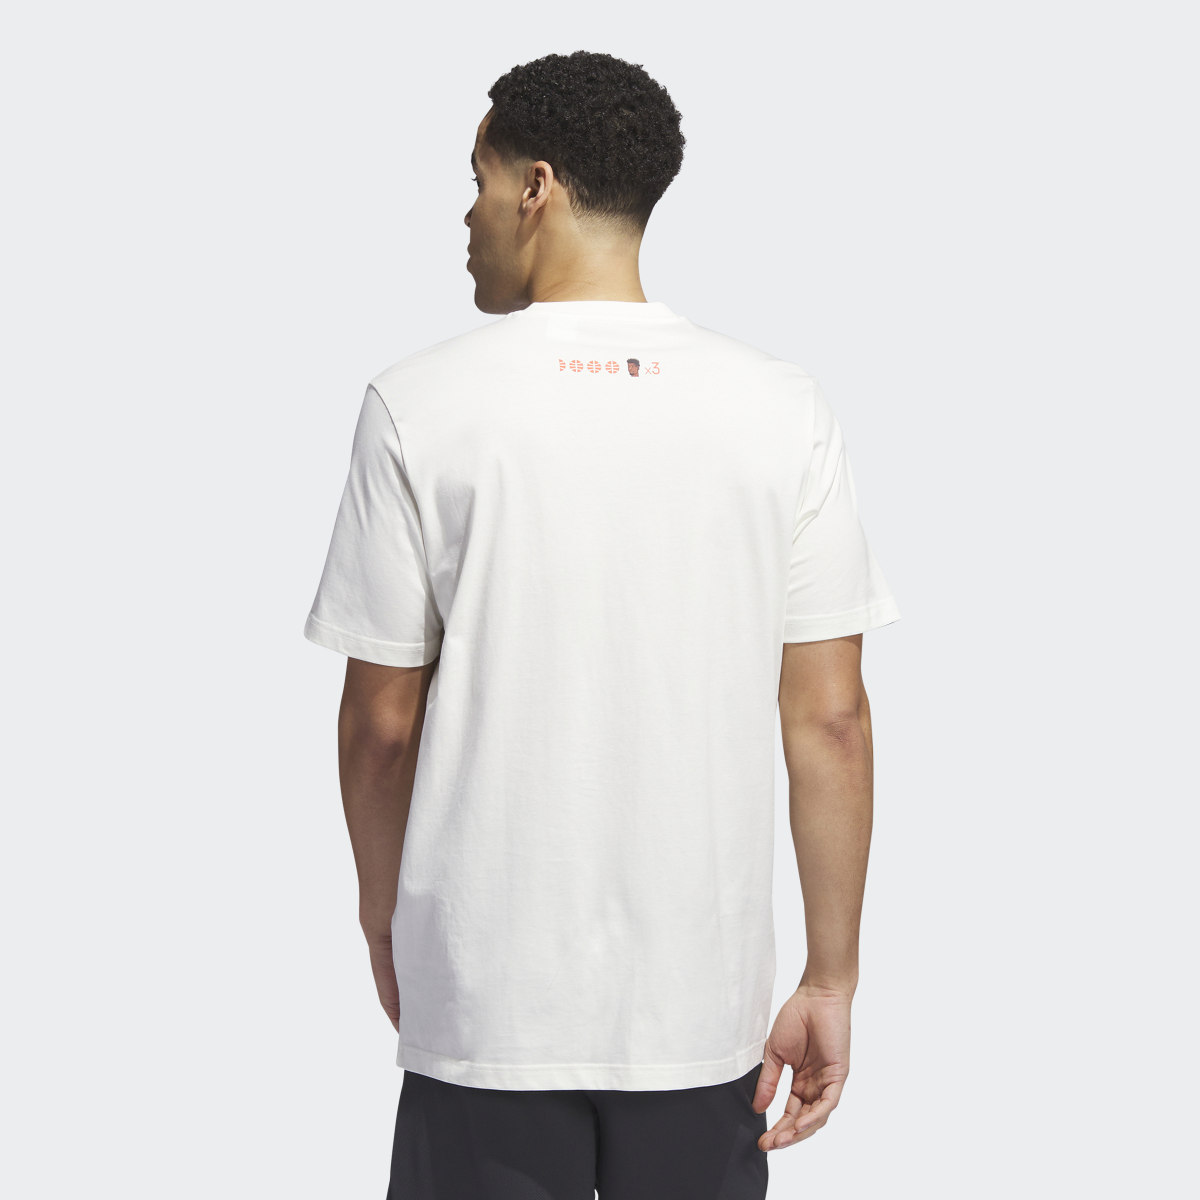 Adidas Donovan Mitchell 8-Bit Graphics Signature Basketball Graphic Tişört. 4